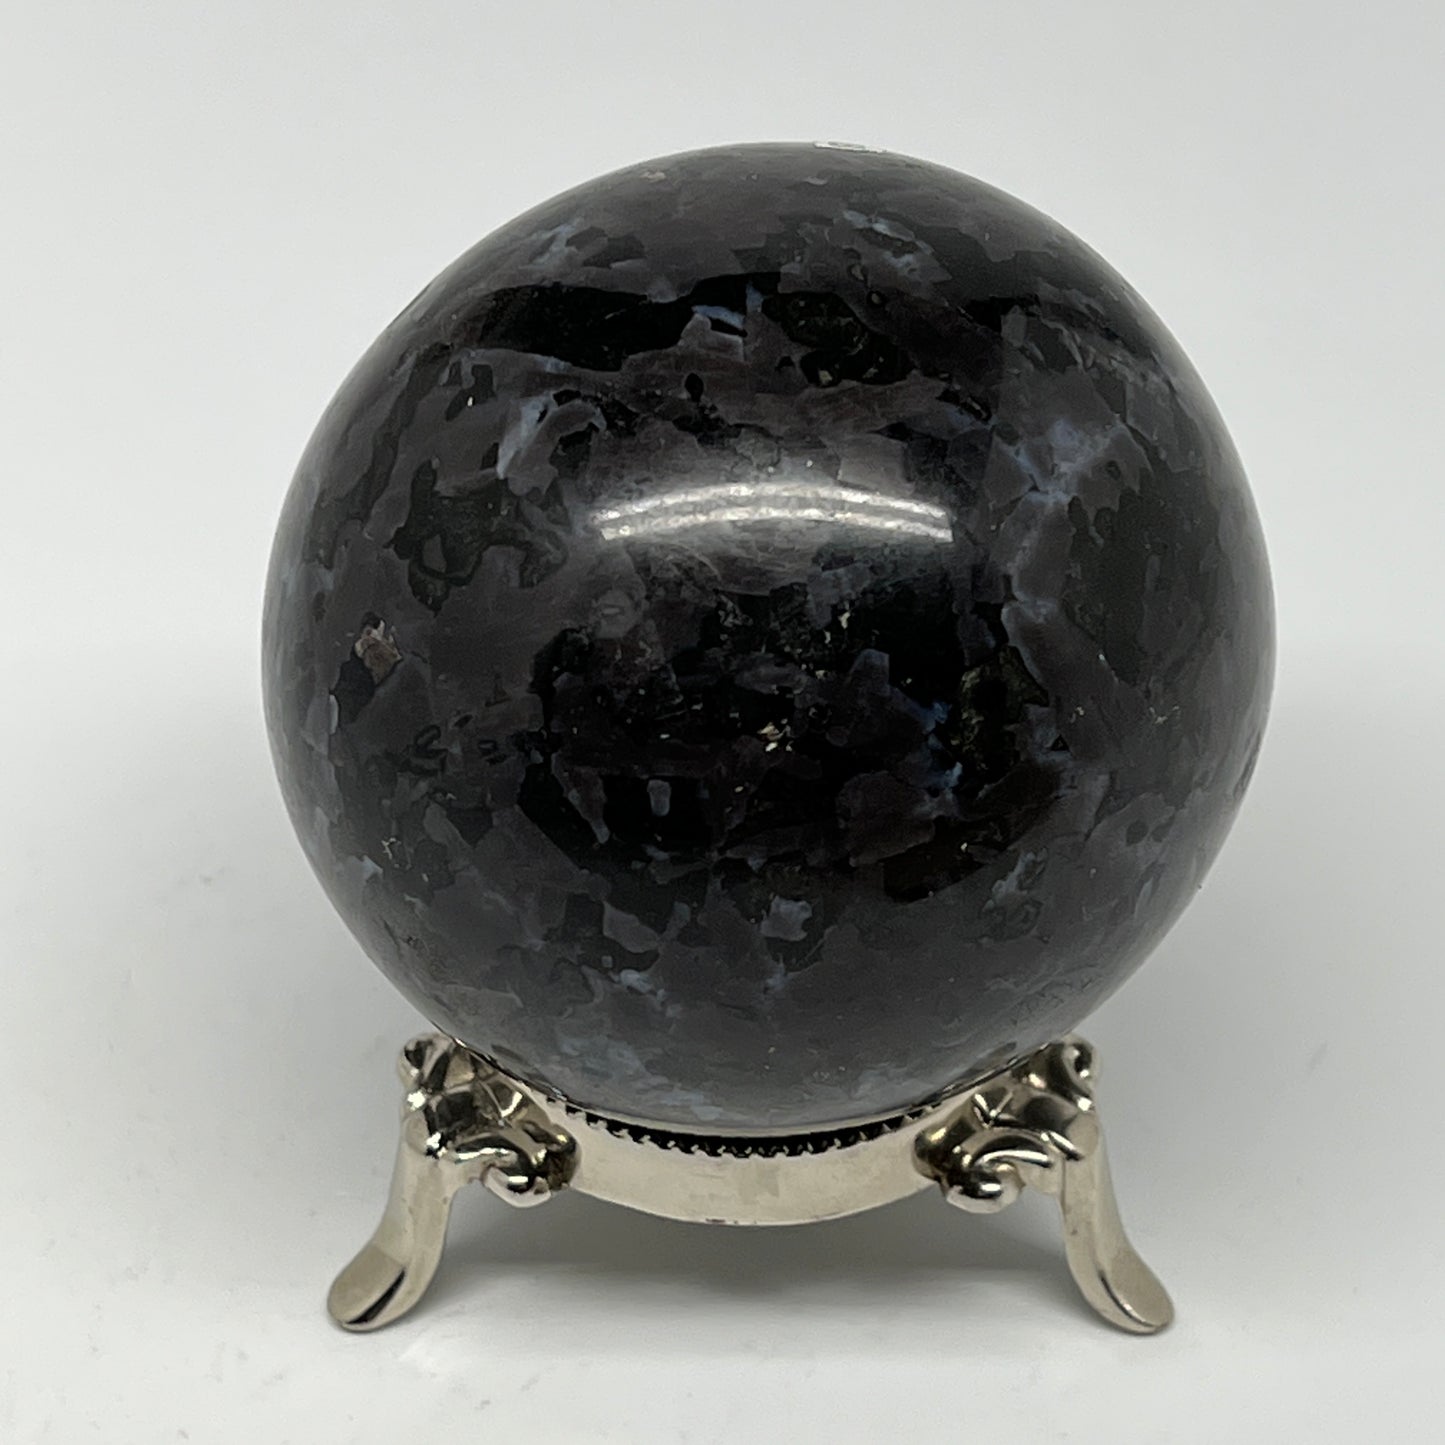 575g,2.9" (73mm) Indigo Gabbro Spheres Merlinite Gemstone @Madagascar,B19803